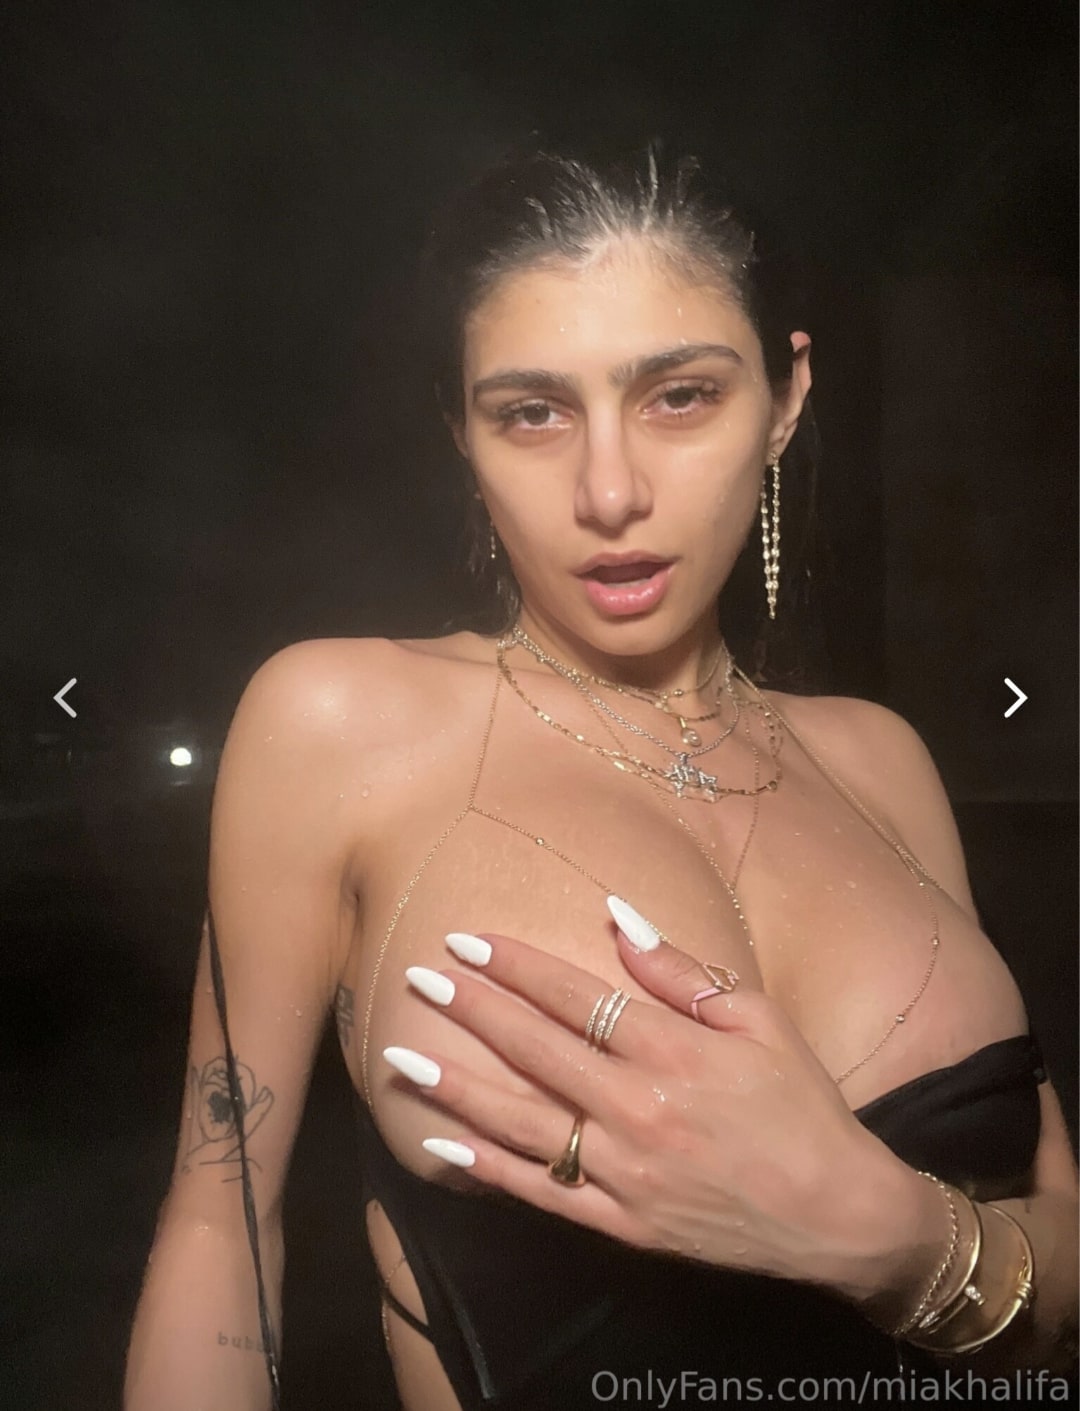 mia khalifa shower full topless tits onlyfans livestream video 69c4840